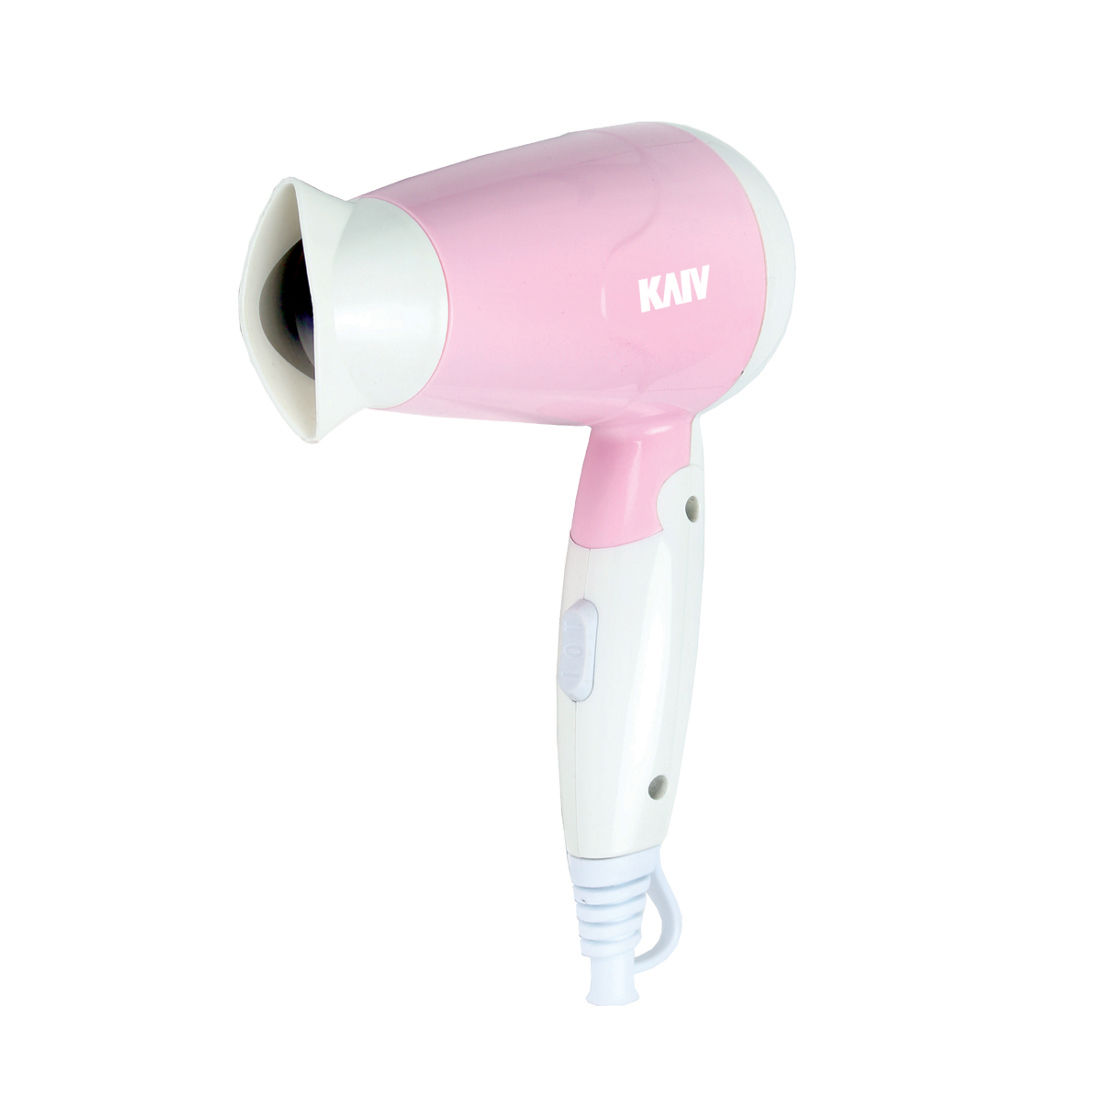 Buy Kaiv HDR5000 Hair Dryer (Pink & White) - Purplle